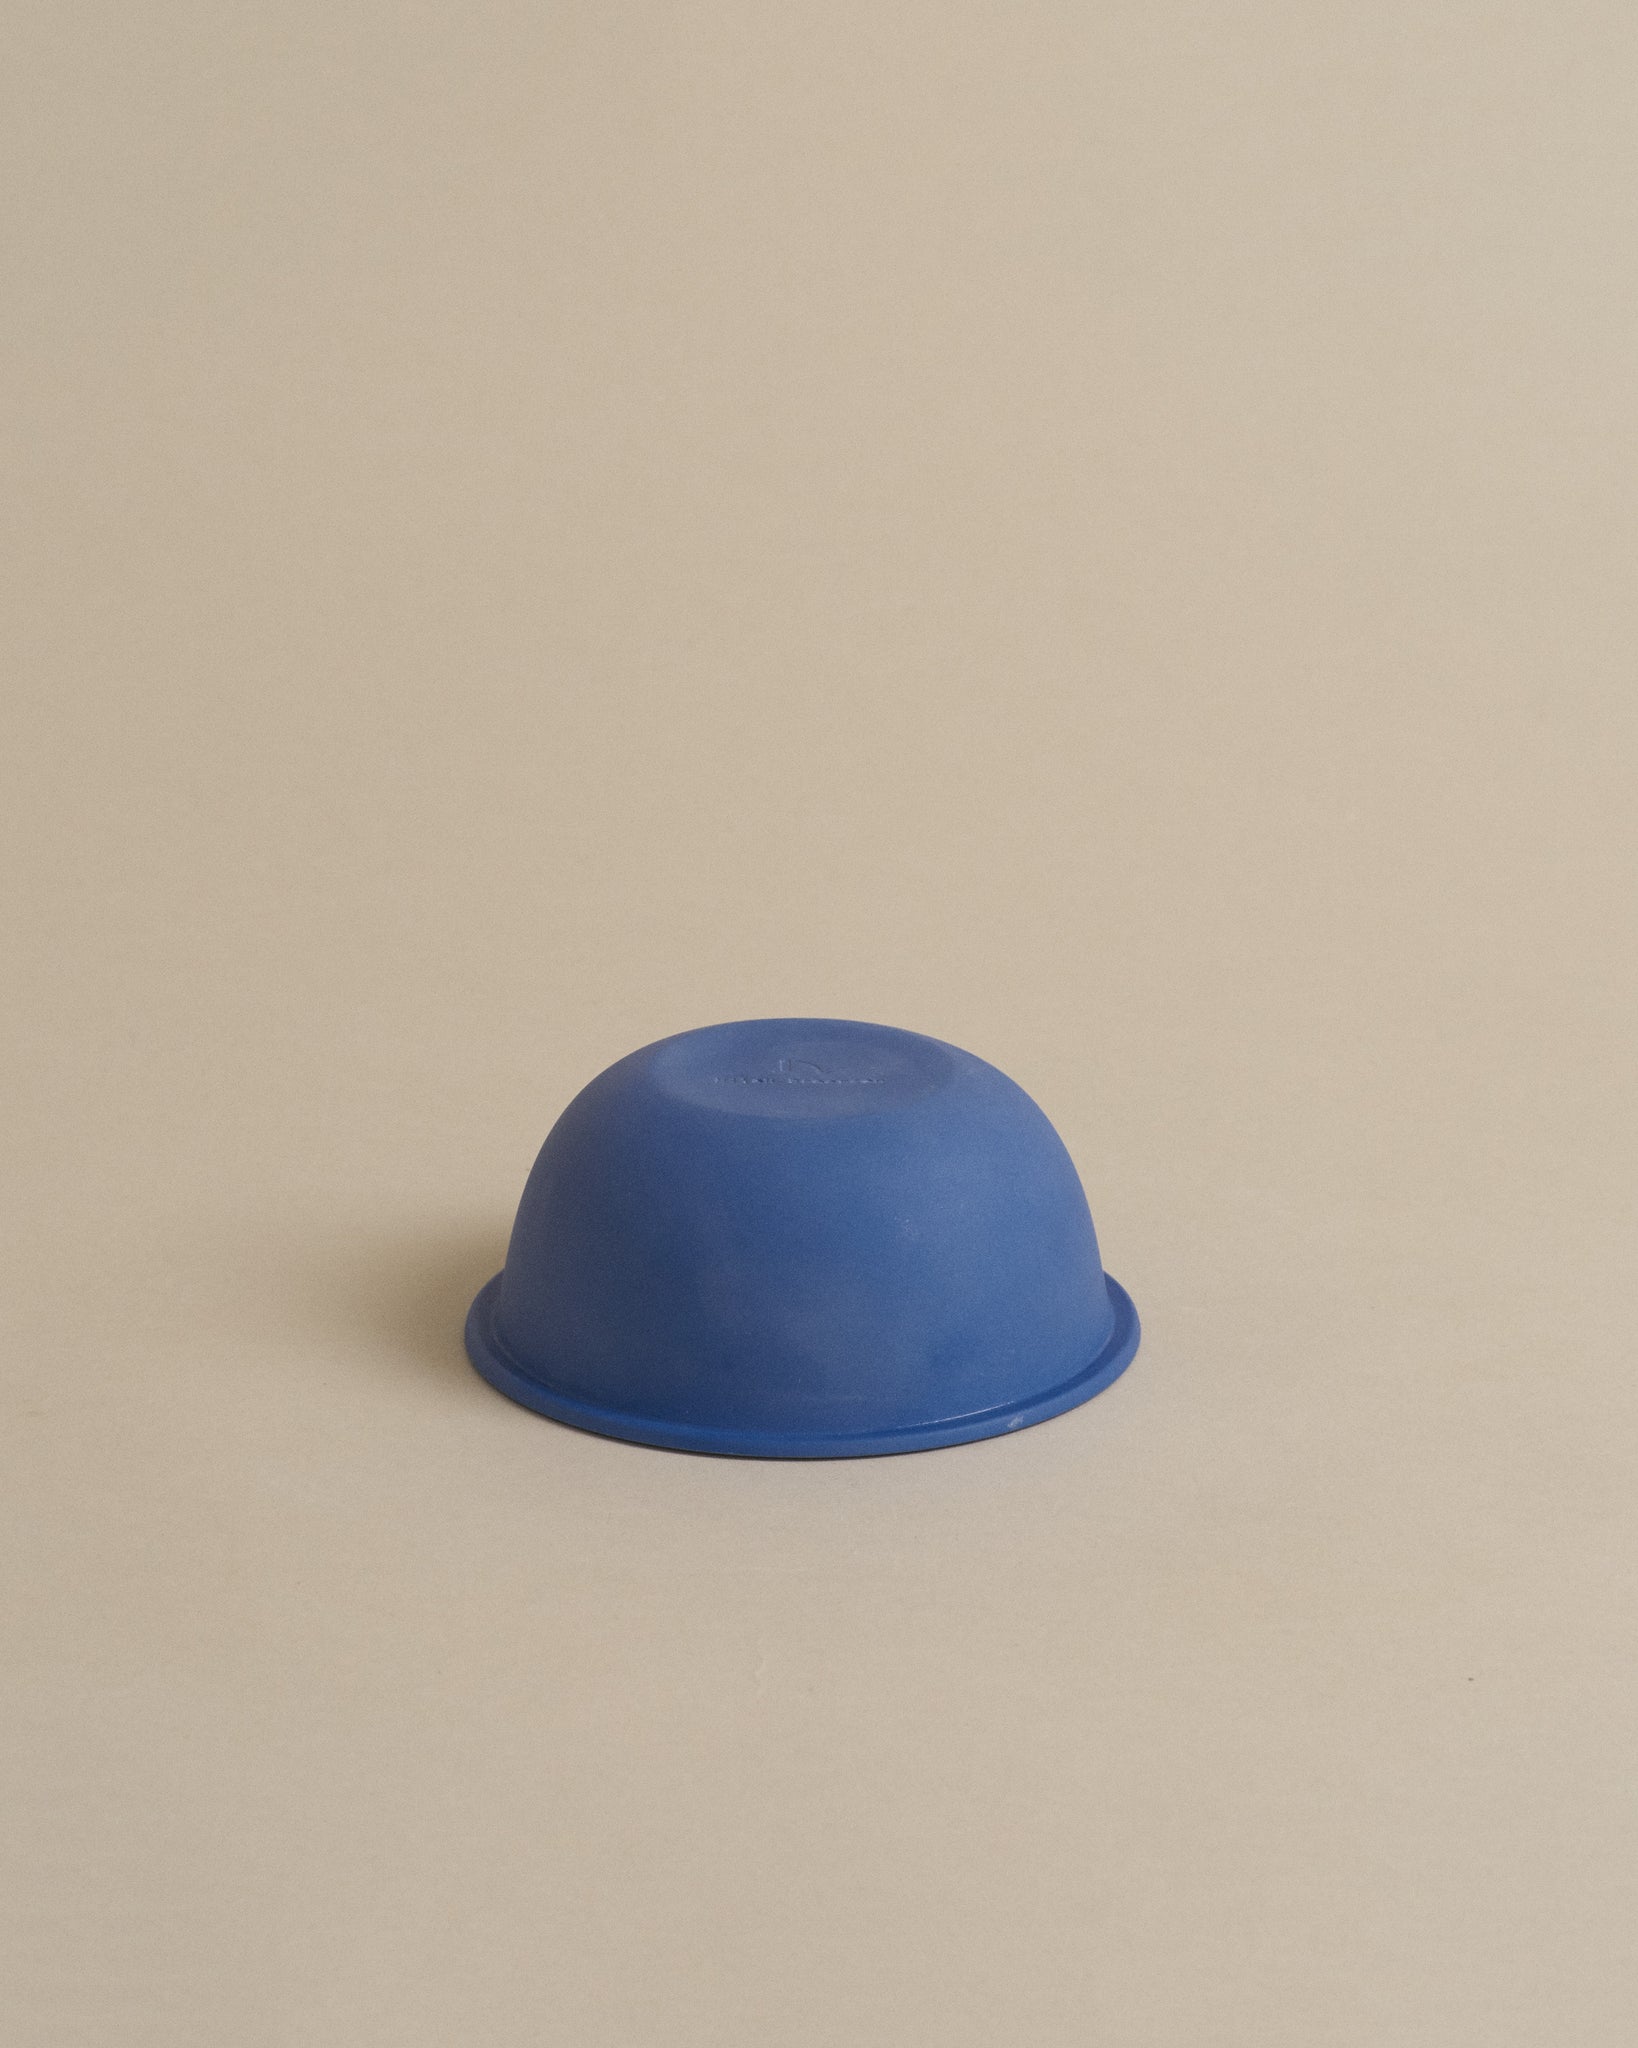 Small Rim Bowl - Cobalt